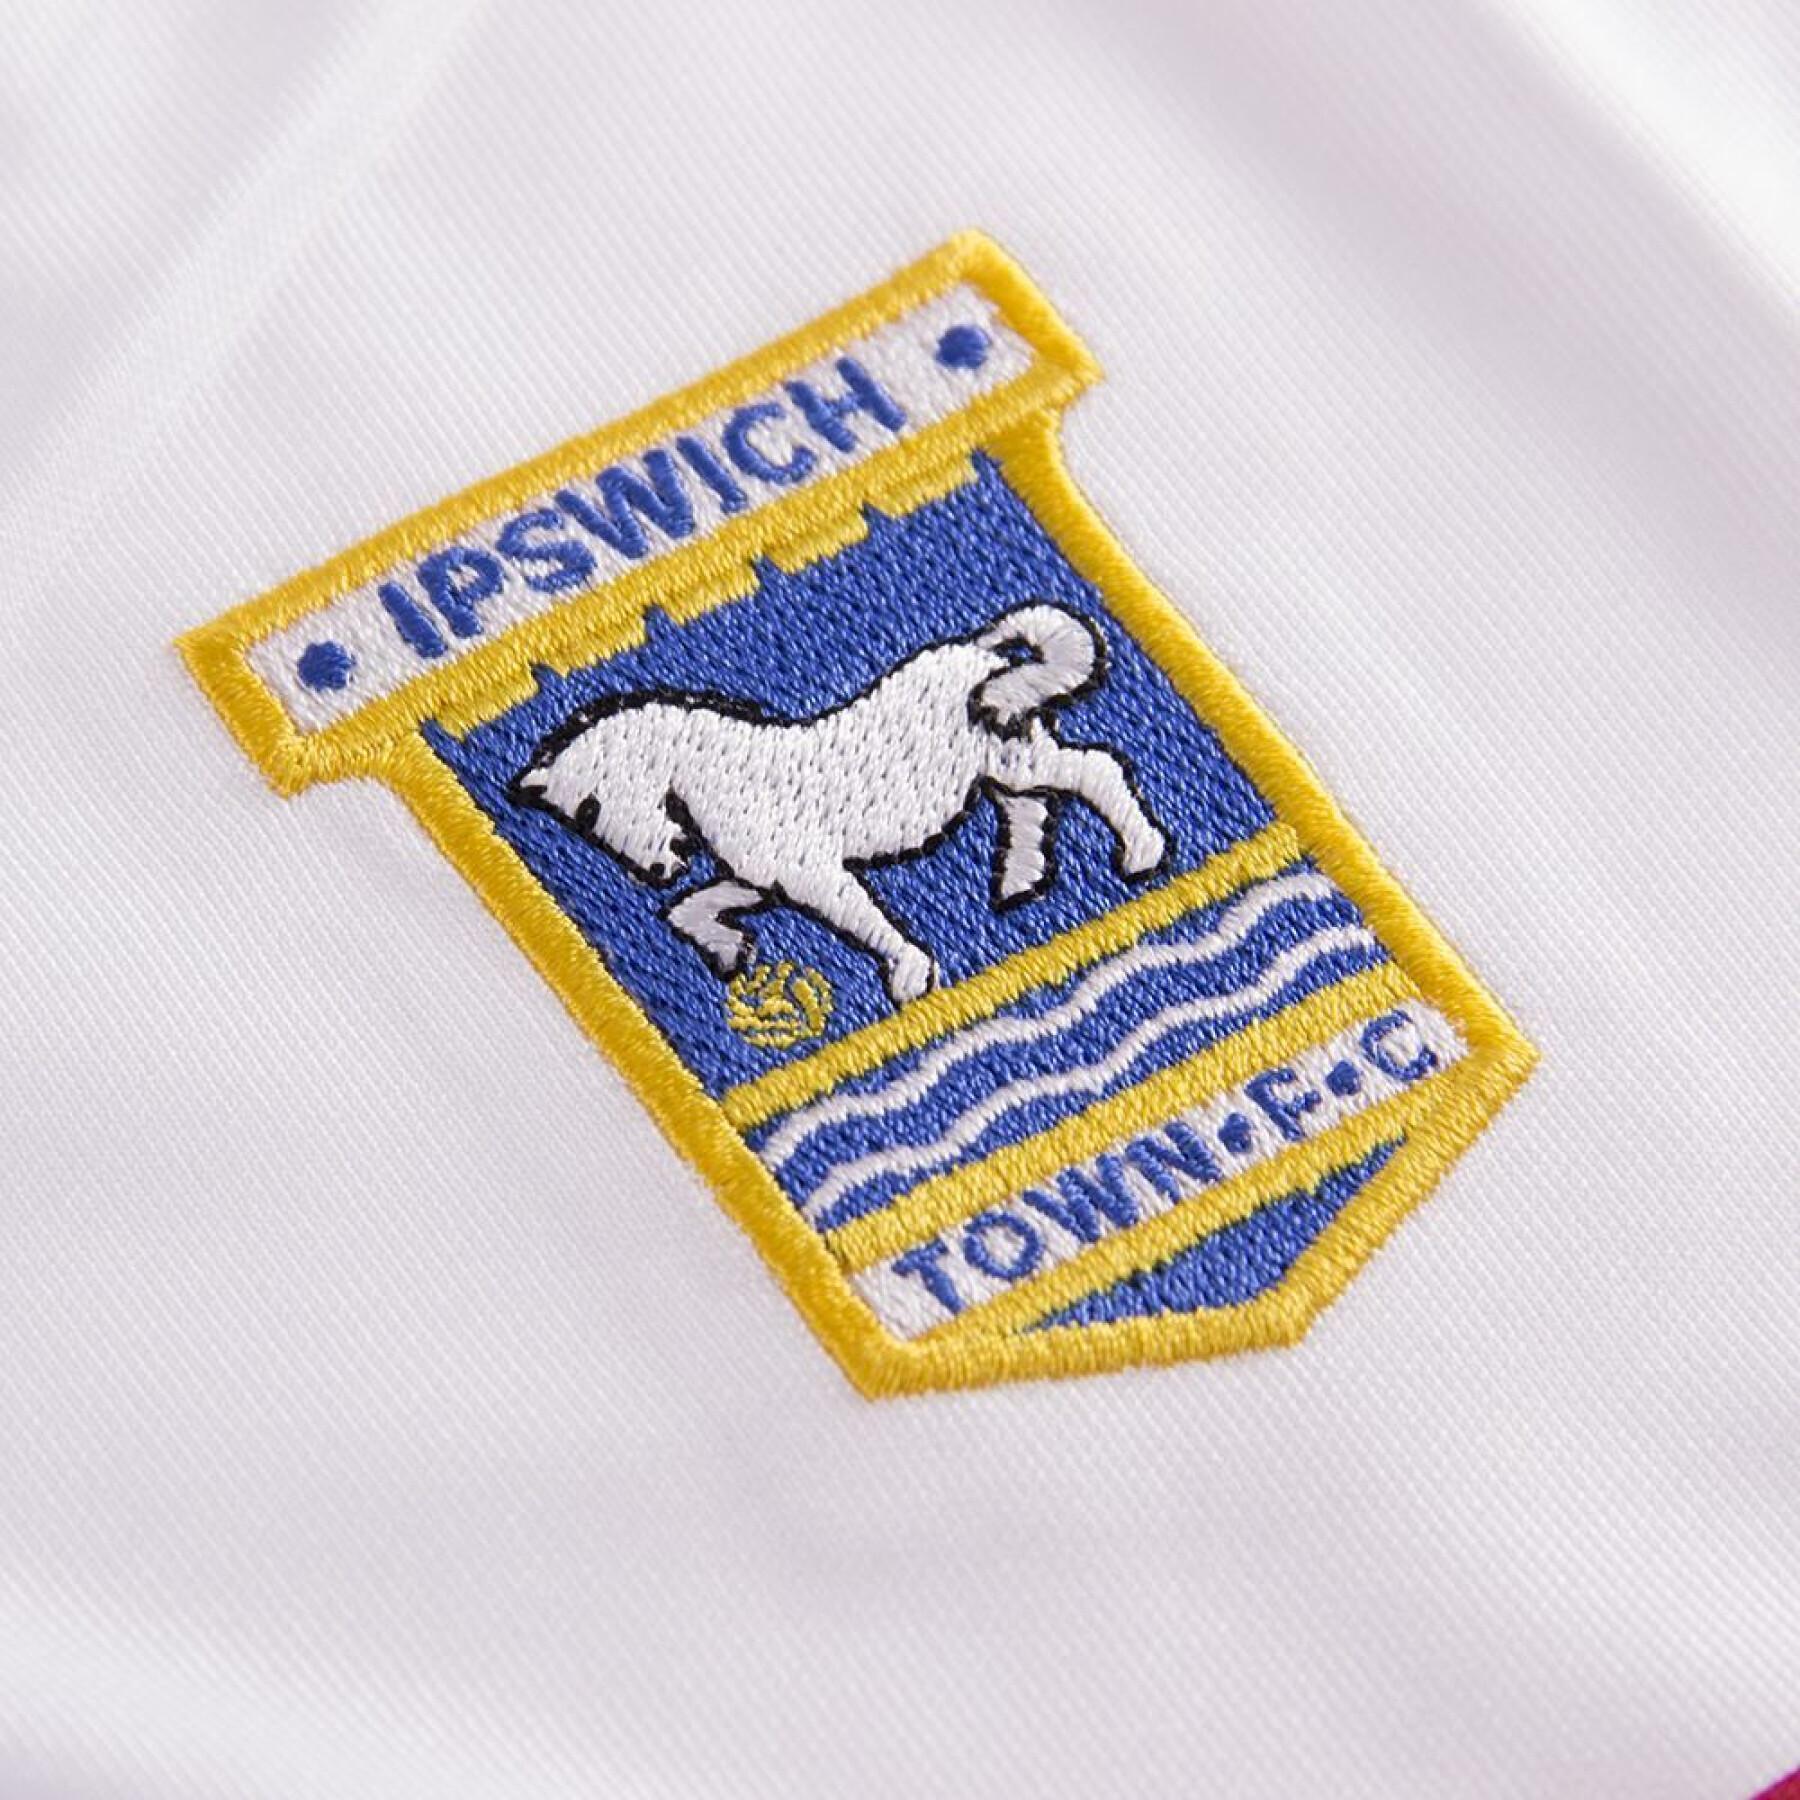 Jersey Ipswich Town FC 1985/86